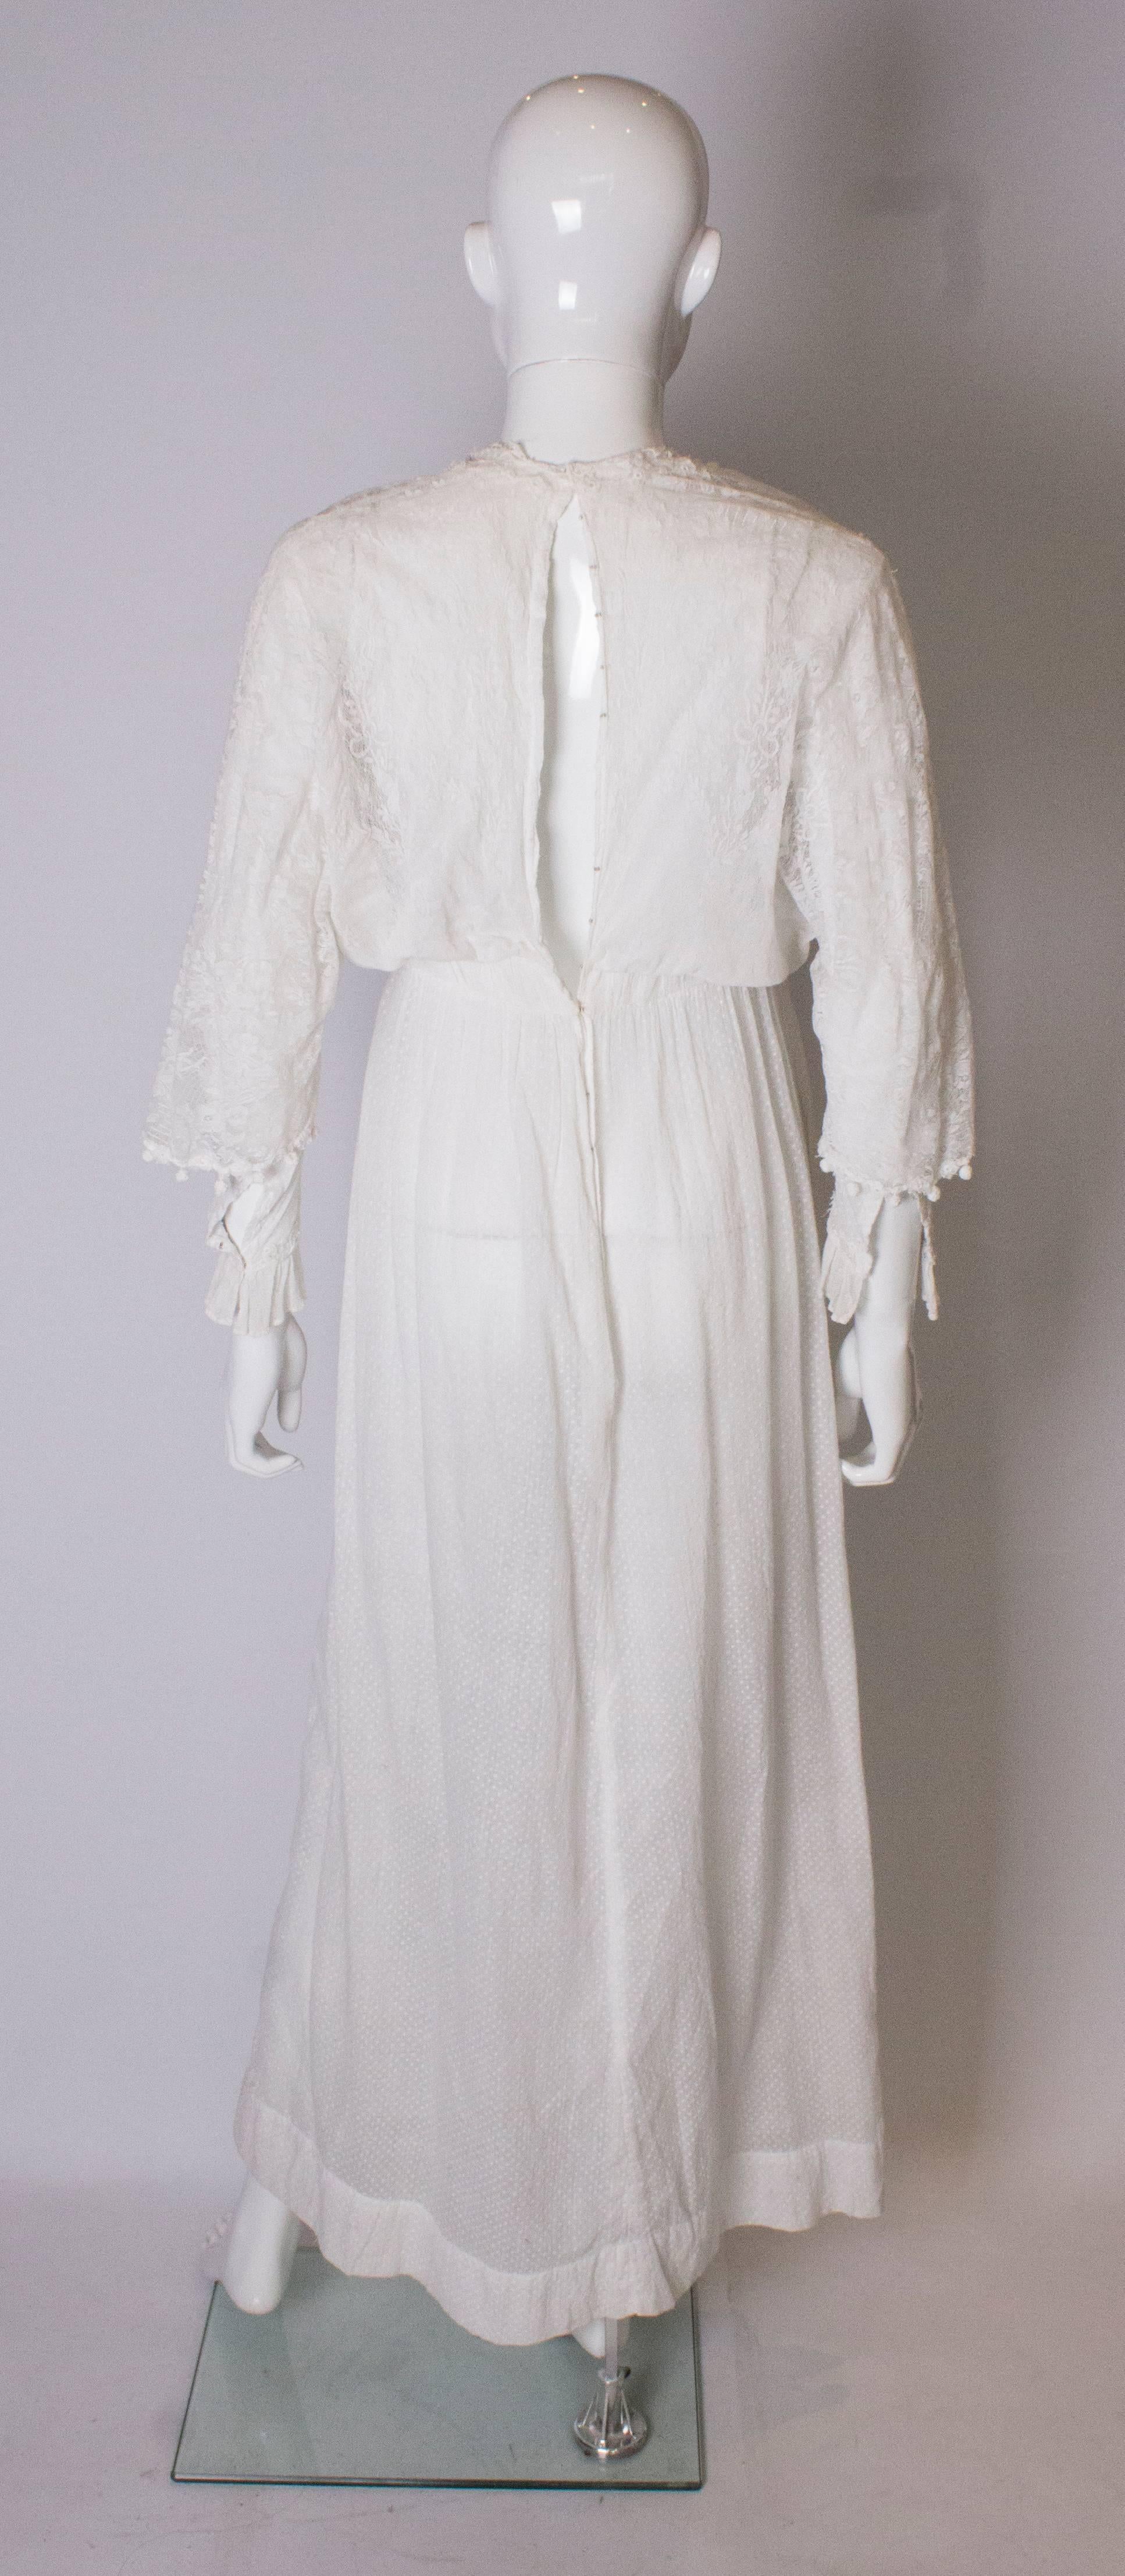 A vintage Edwardian white cotton lawn dress with lace detail  1